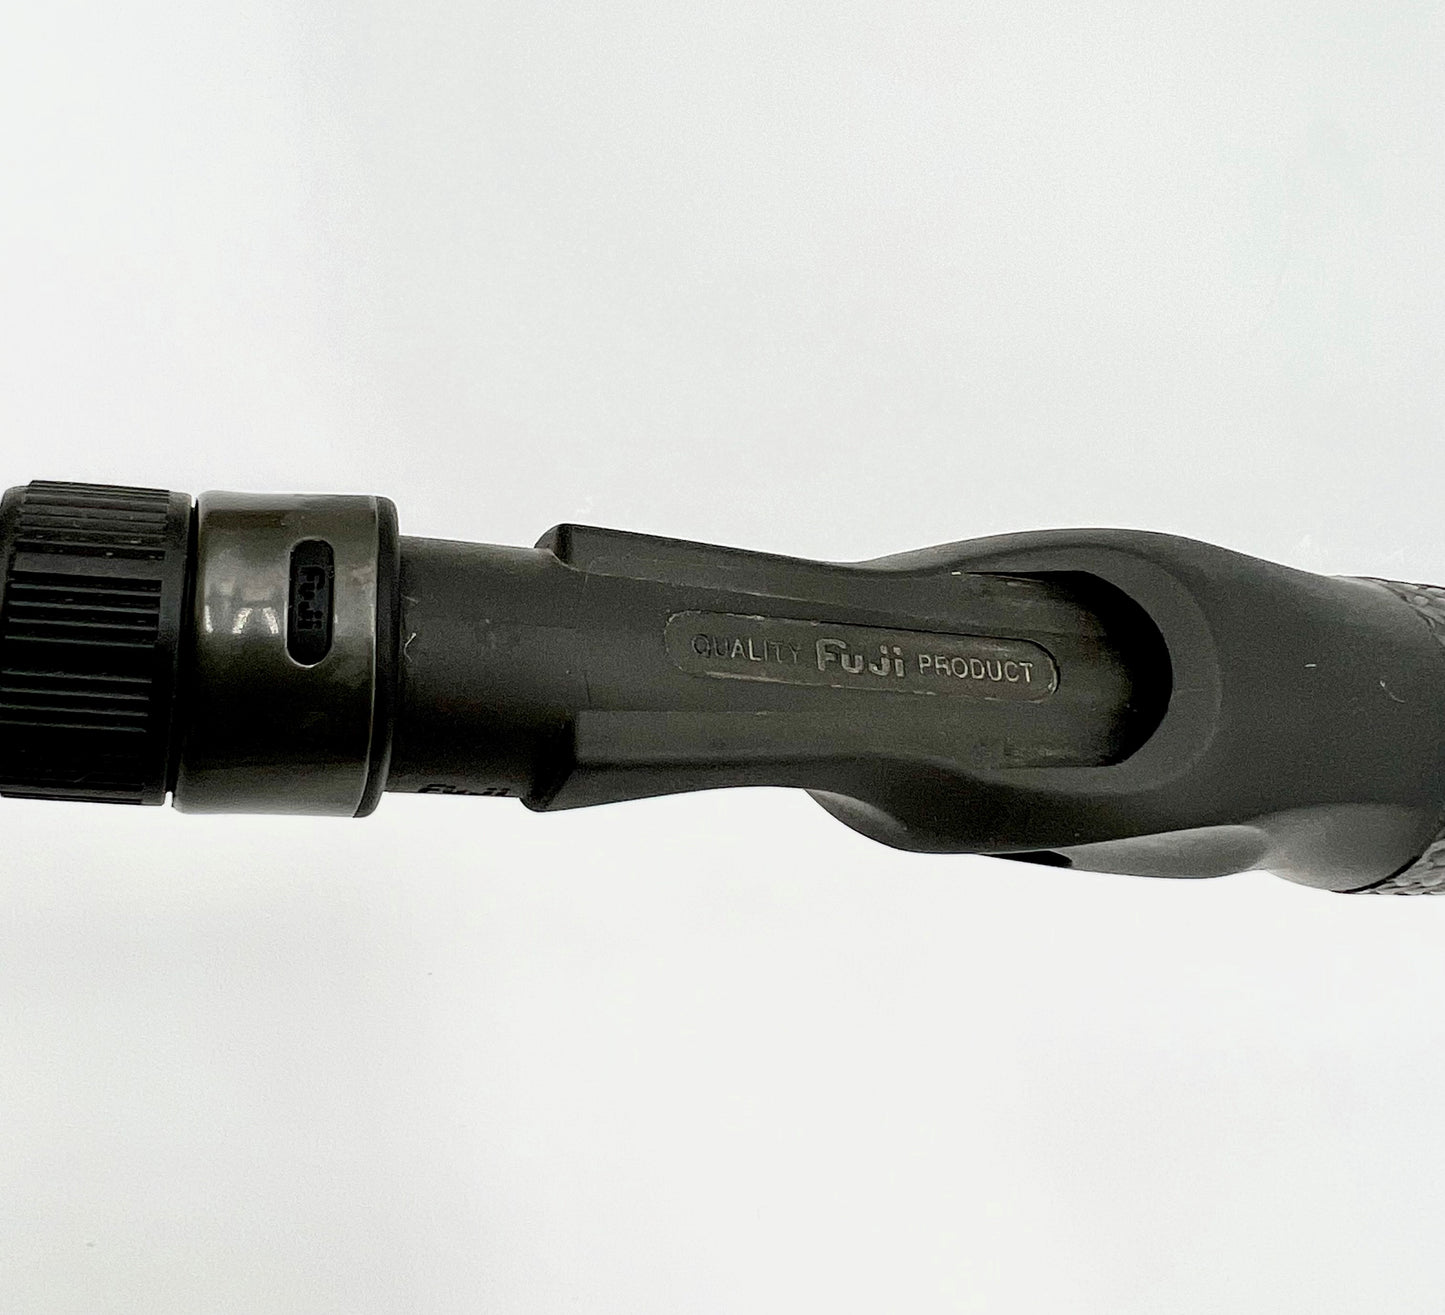 Idaho Rod and Reel Link Baitcasting Rod, 7'1", Fast Action - Multi Purpose